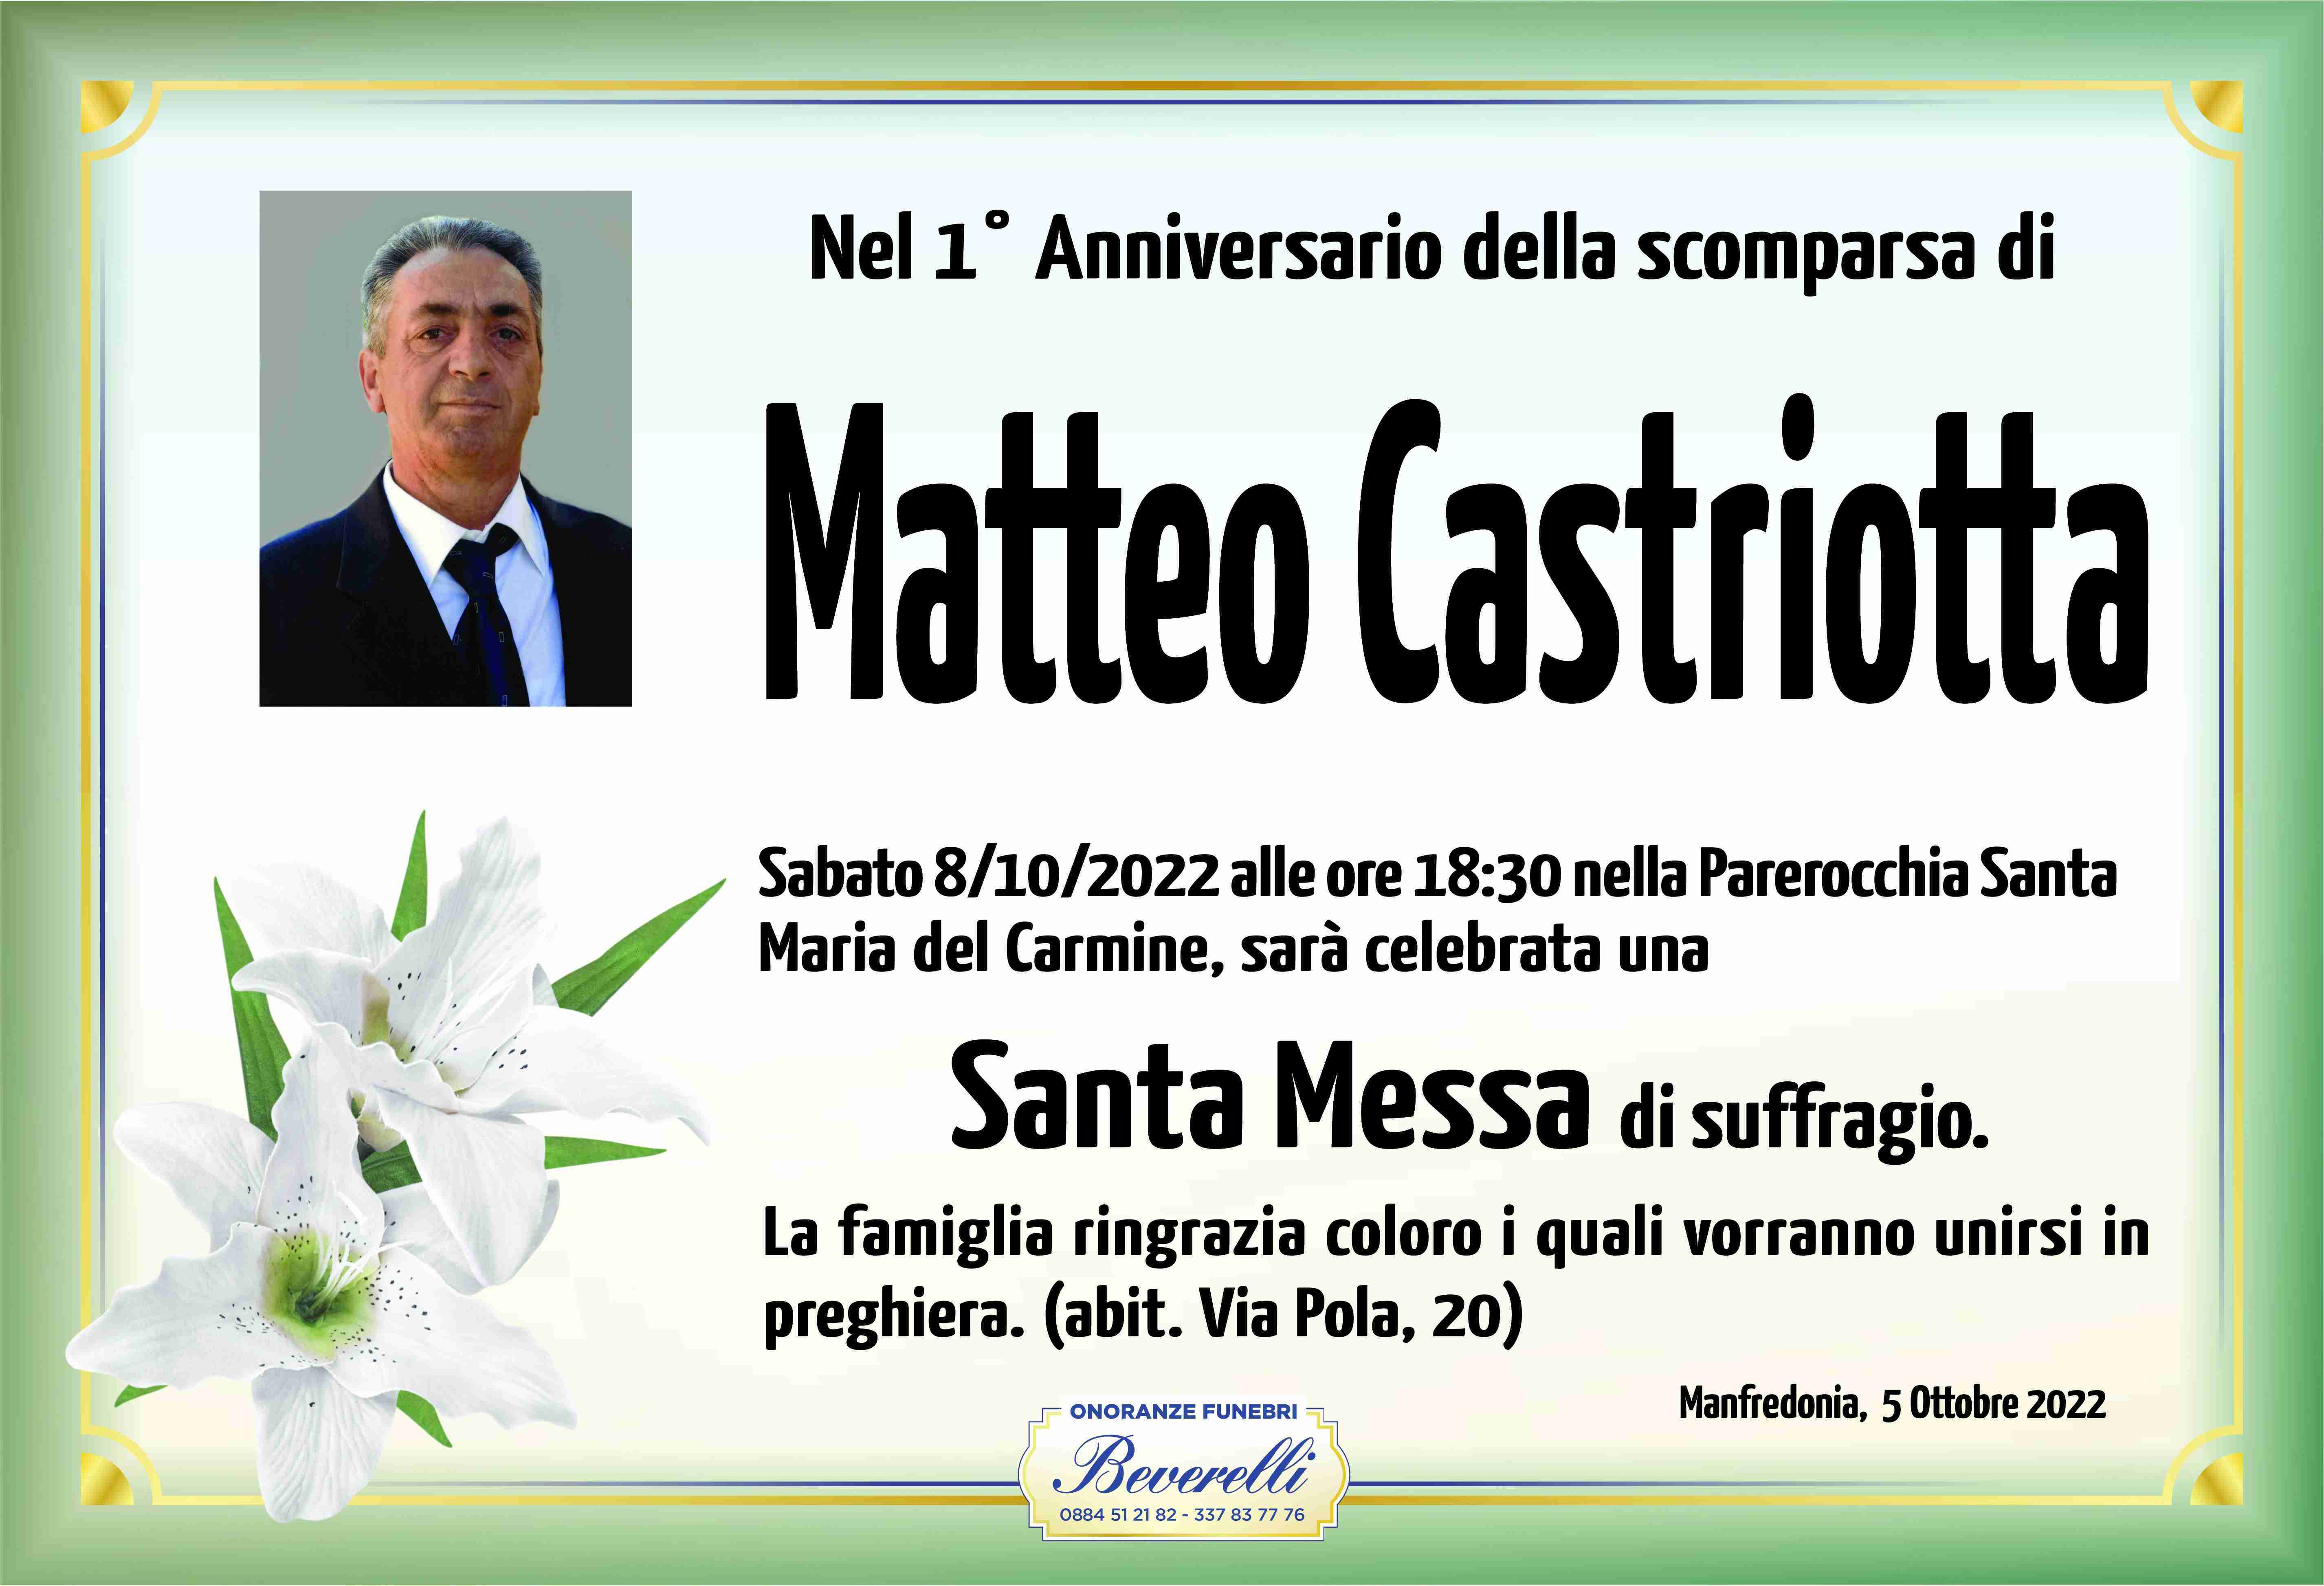 Matteo Castriotta